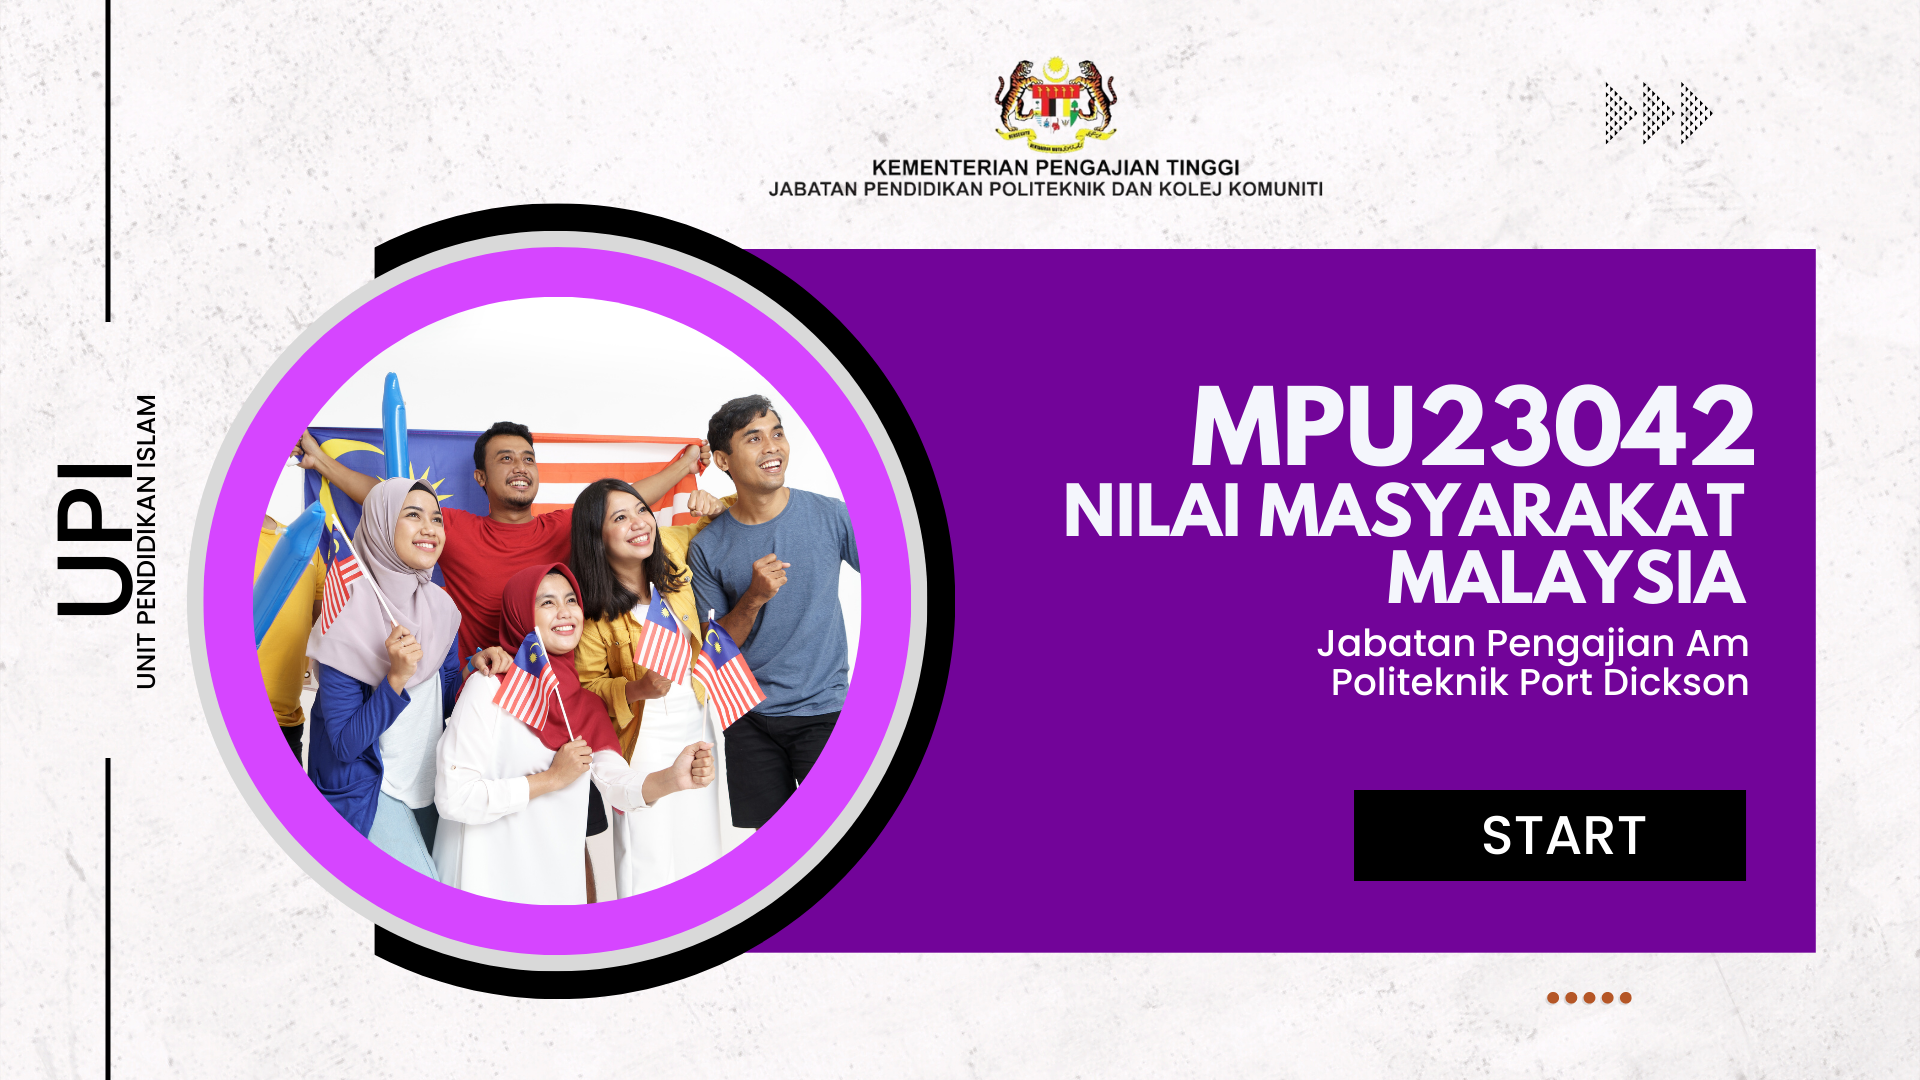 NILAI MASYARAKAT MALAYSIA (MPU23042)